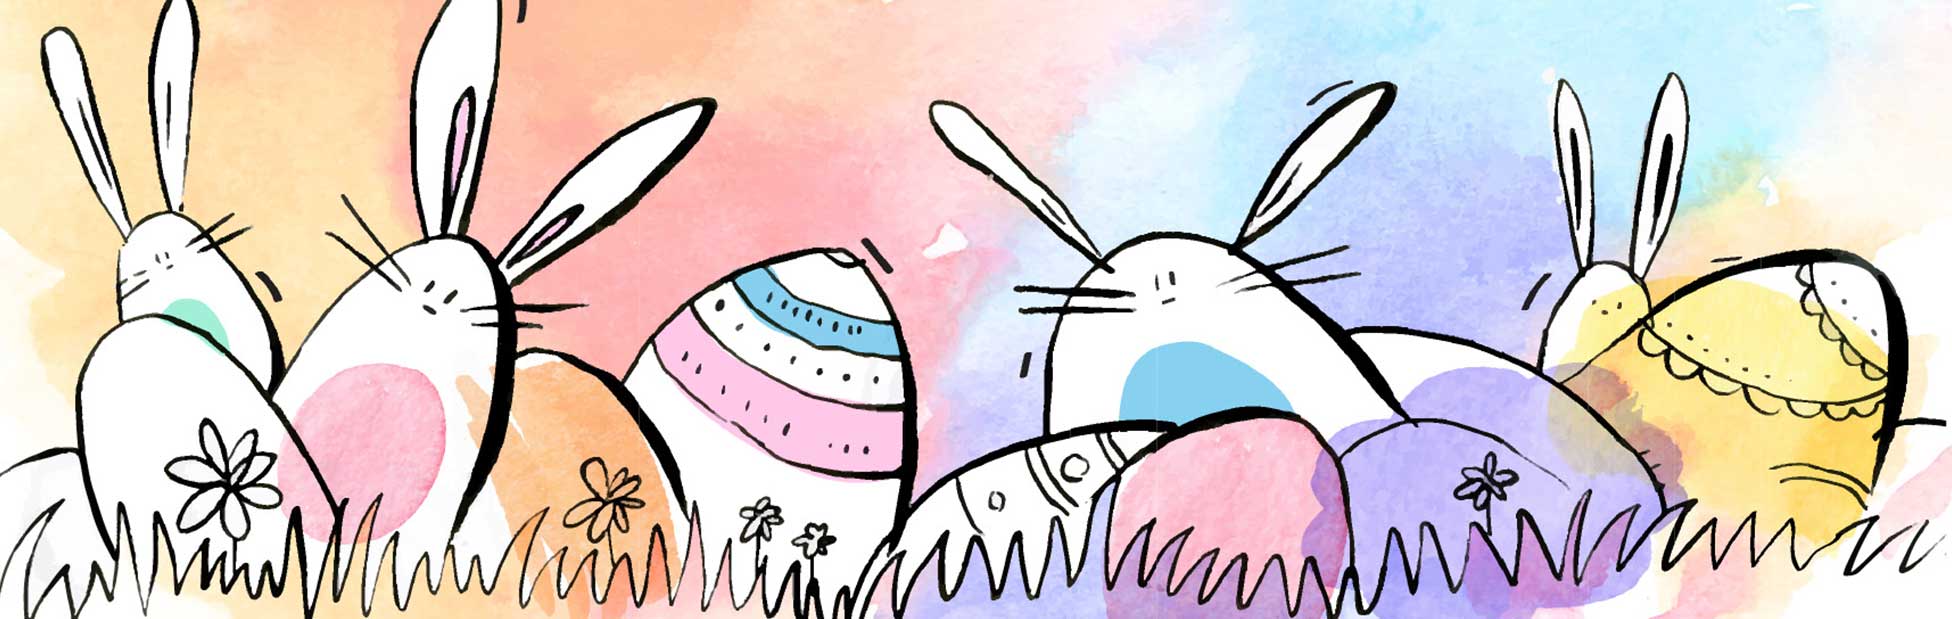 Cartoon of Easter bunnies and eggs